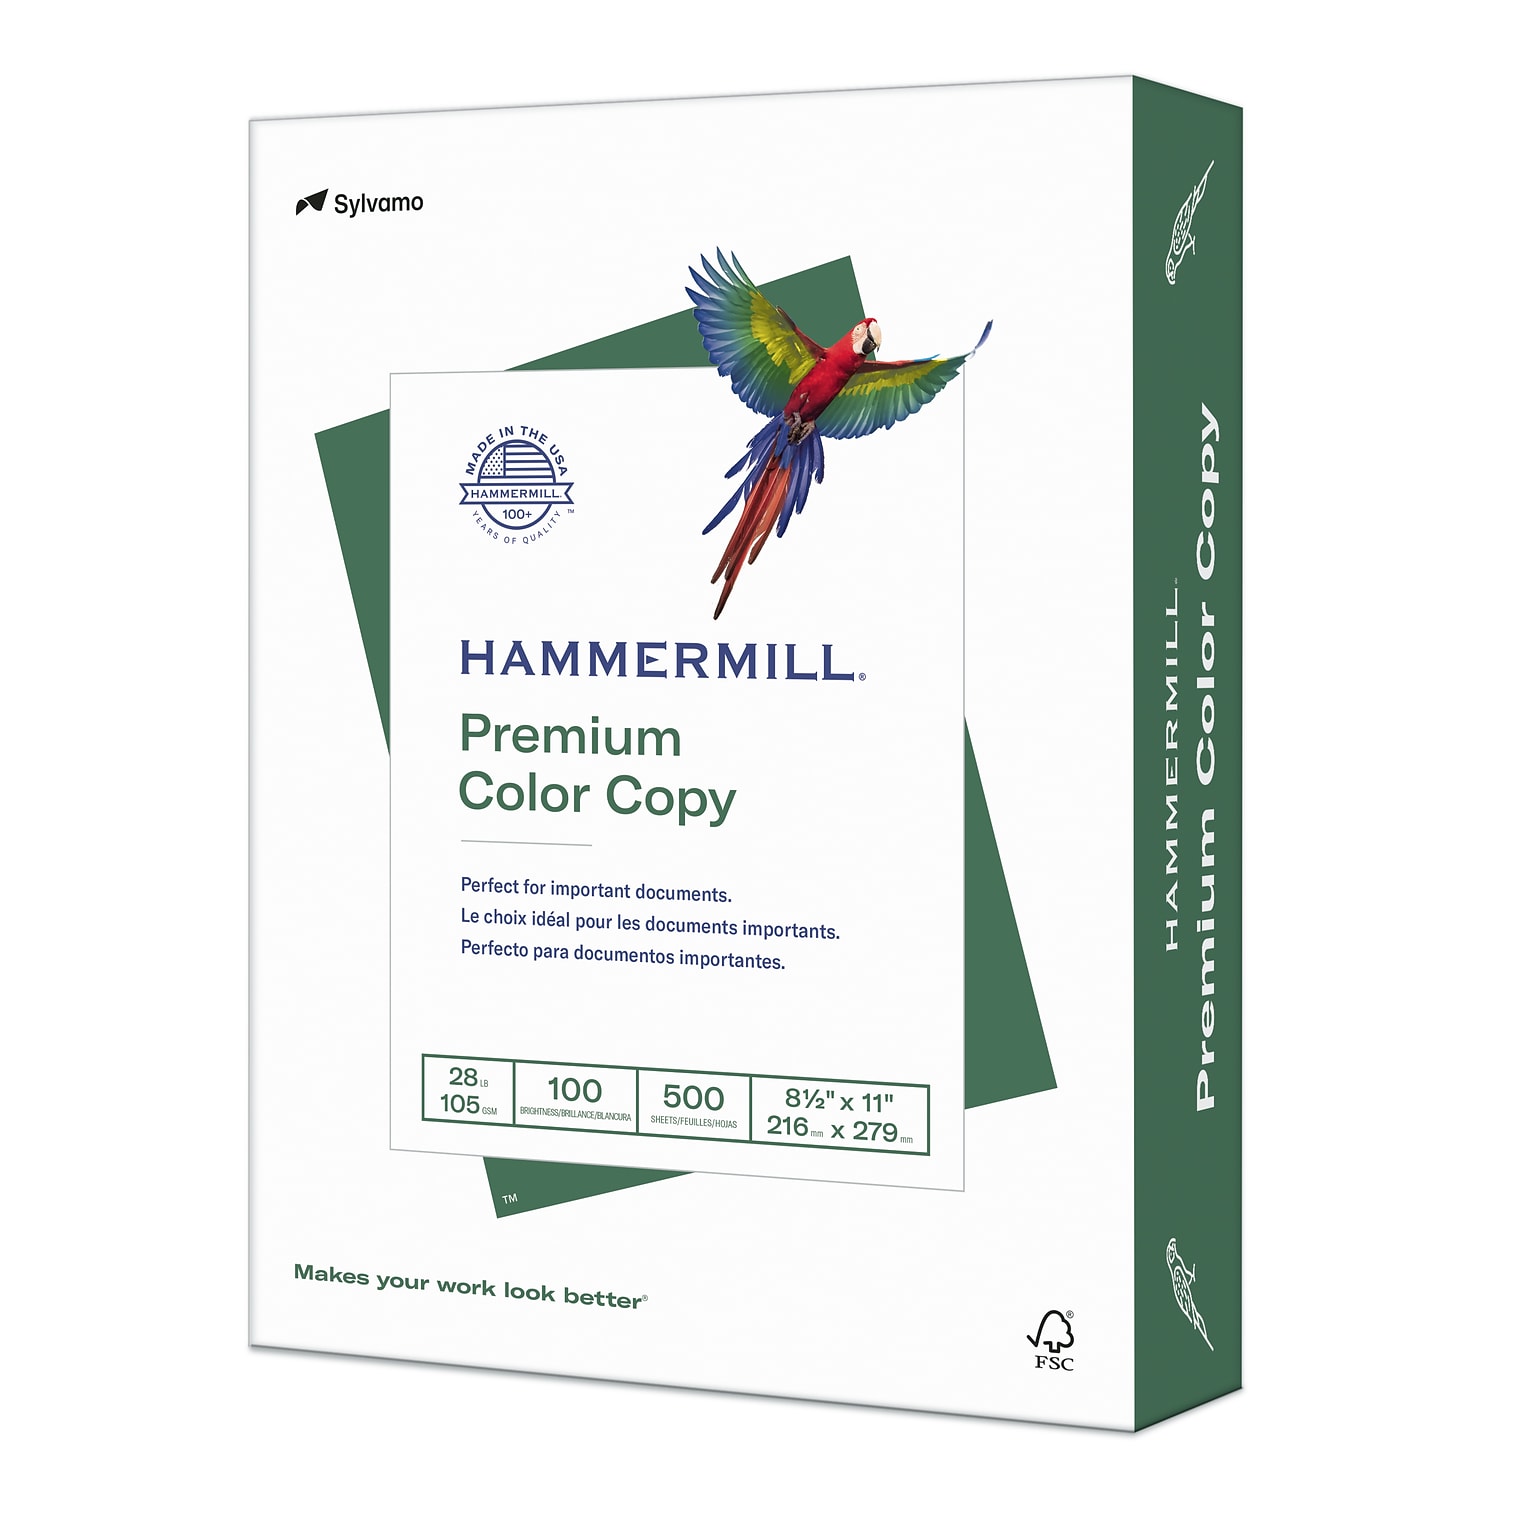 Hammermill Premium 8.5 x 11 Color Copy Paper, 28 lbs., 100 Brightness, 500 Sheets/Ream (102467)